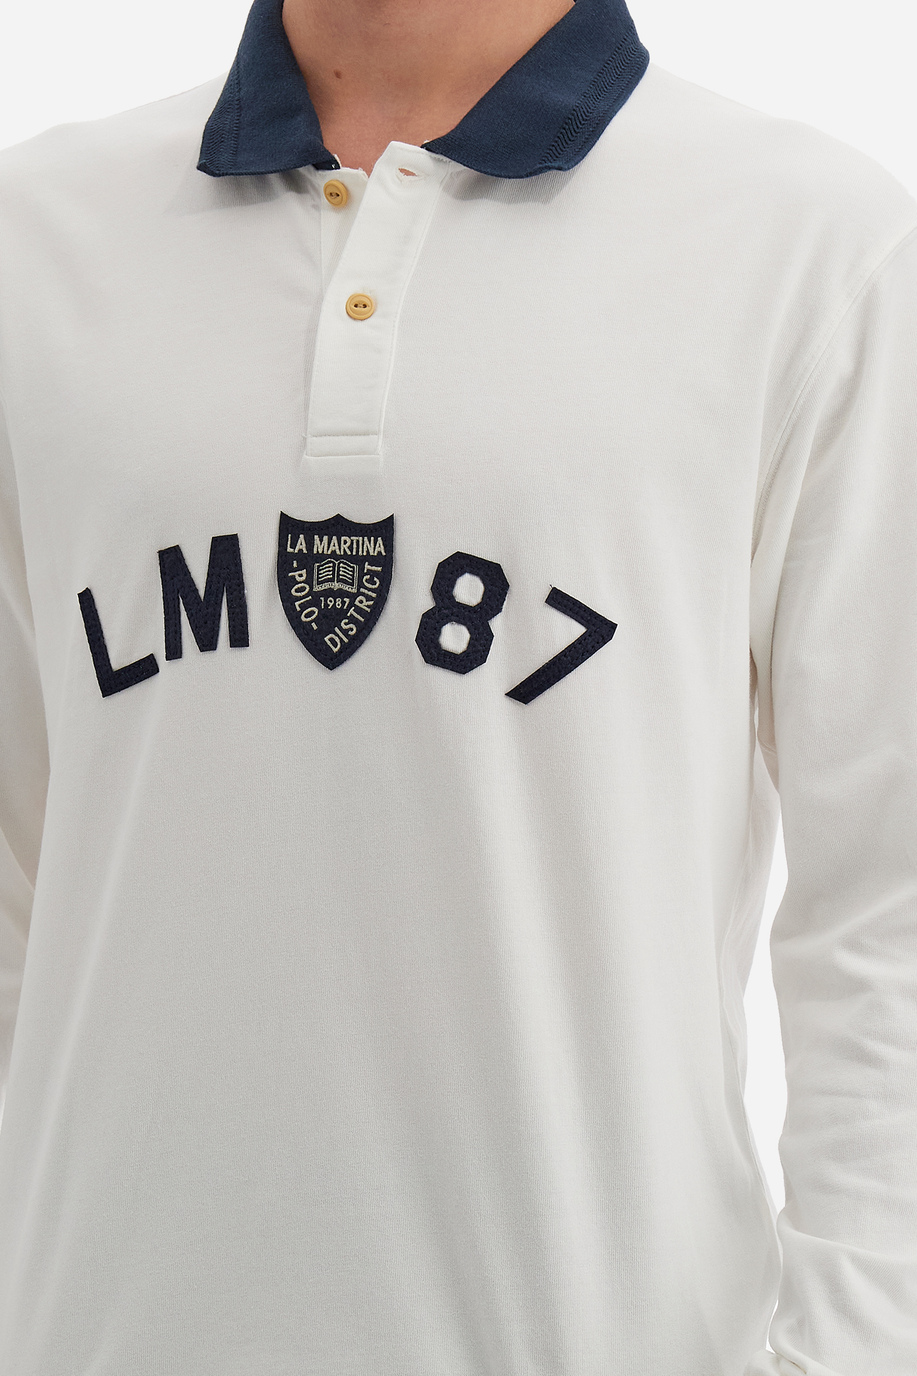 Polo Academy men's long-sleeved polo shirt with small contrasting collar logo - Vardis - Apparel | La Martina - Official Online Shop